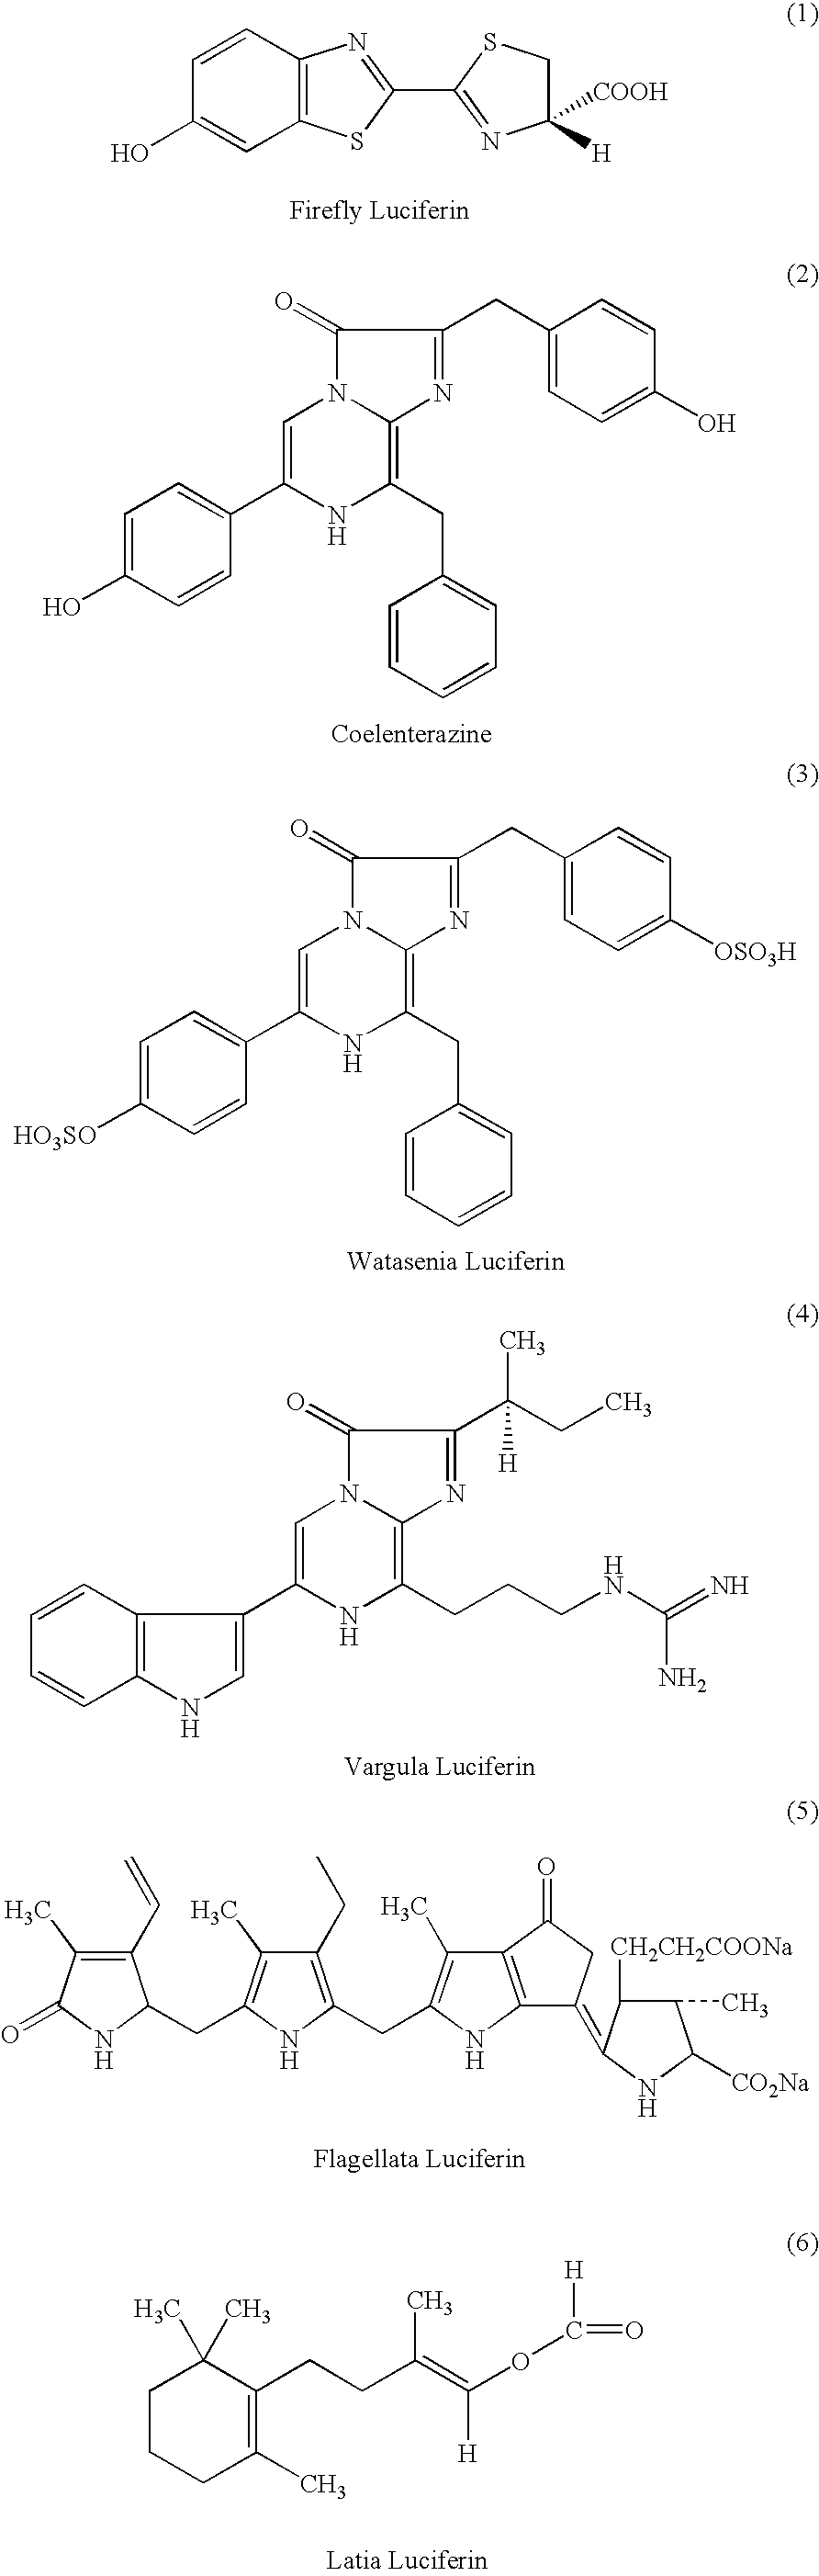 Luciferase and photoprotein